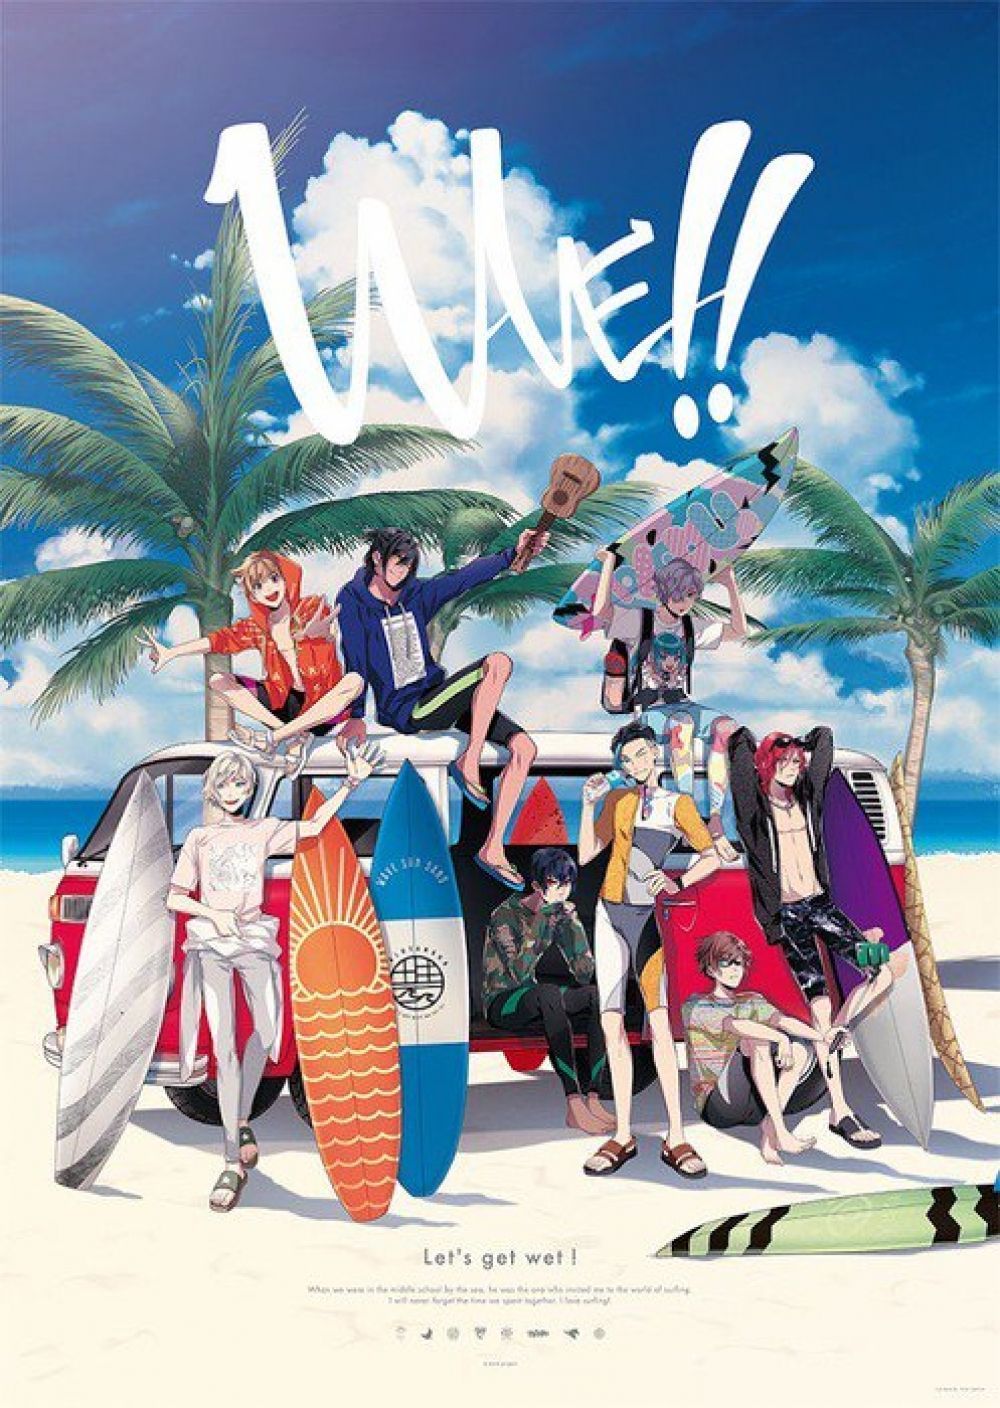 Wave!!: Surfing Yappe!! Ep. 1 (Spoilers!) – Anime Tokoyo